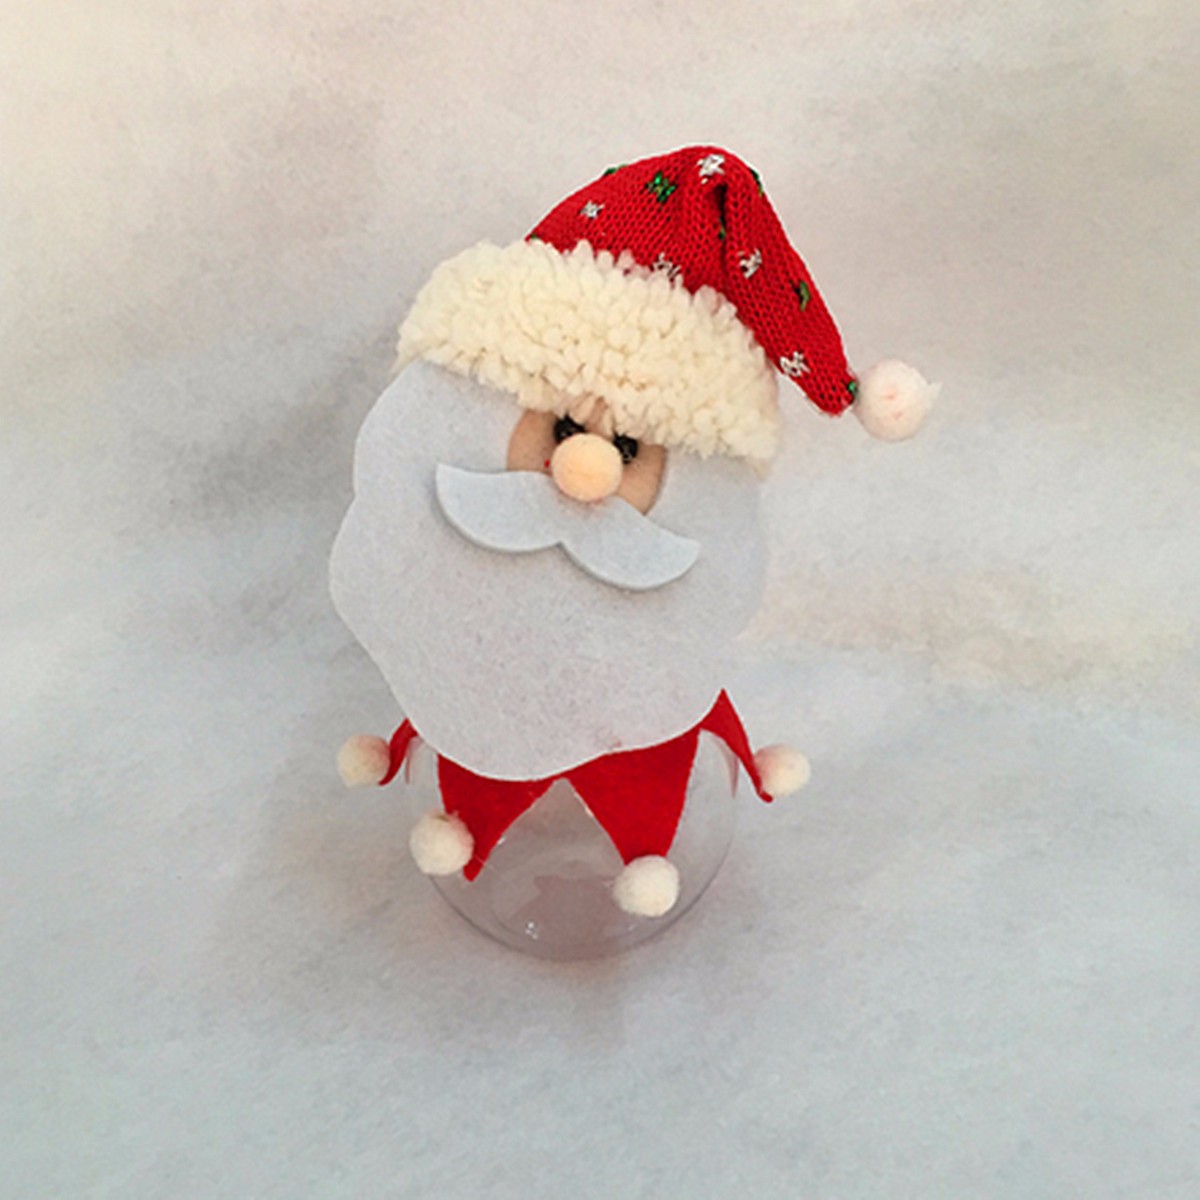 Christmas-Candy-Box-Santa-Claus-Sonwman-Elk-Wedding-Party-Birthday-Gift-Packing-Bags-1110184